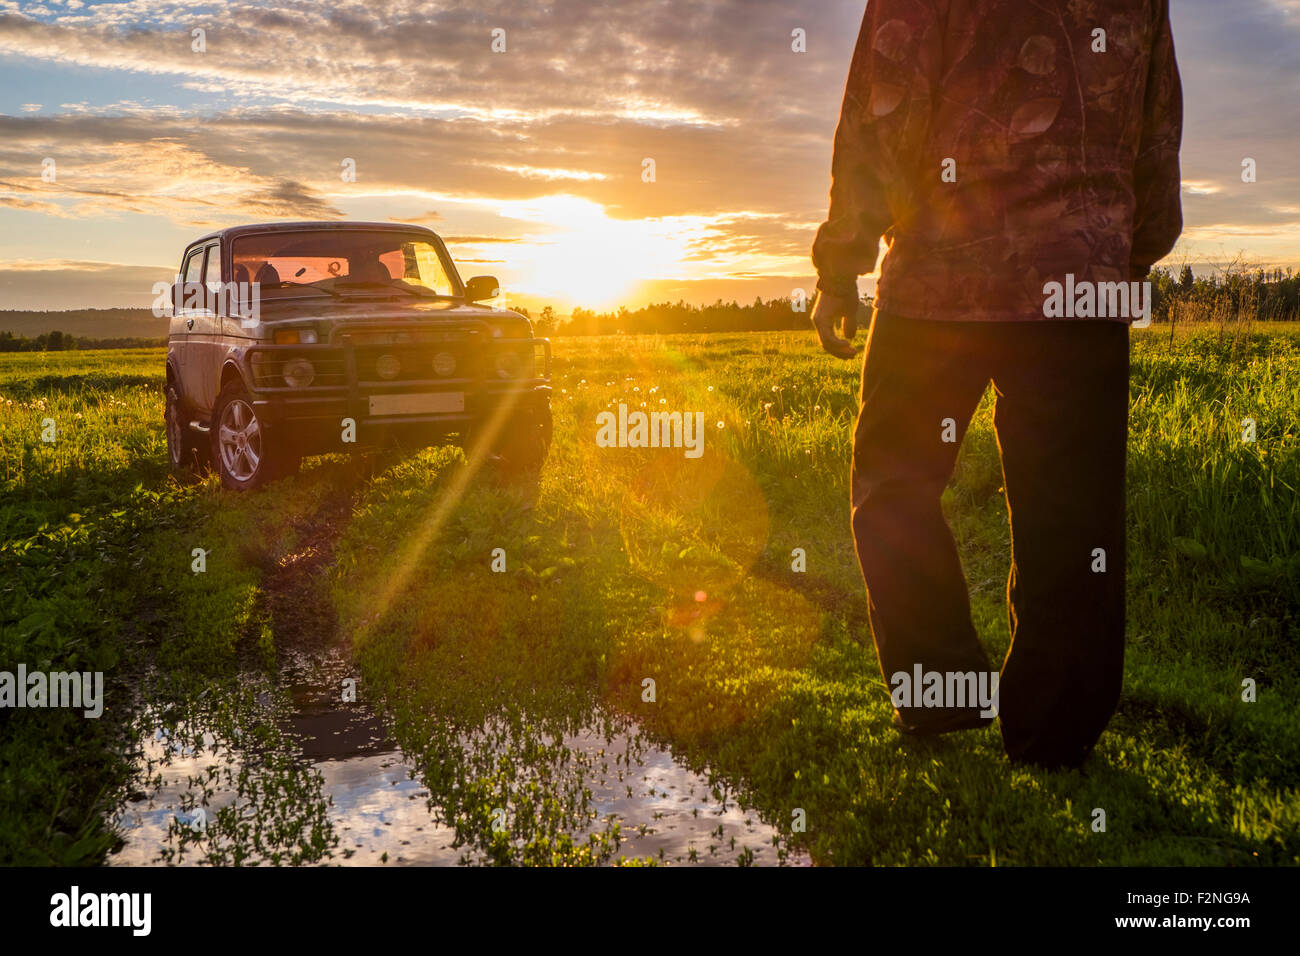 Mari man walking toward car at sunset in rural field Stock Photo